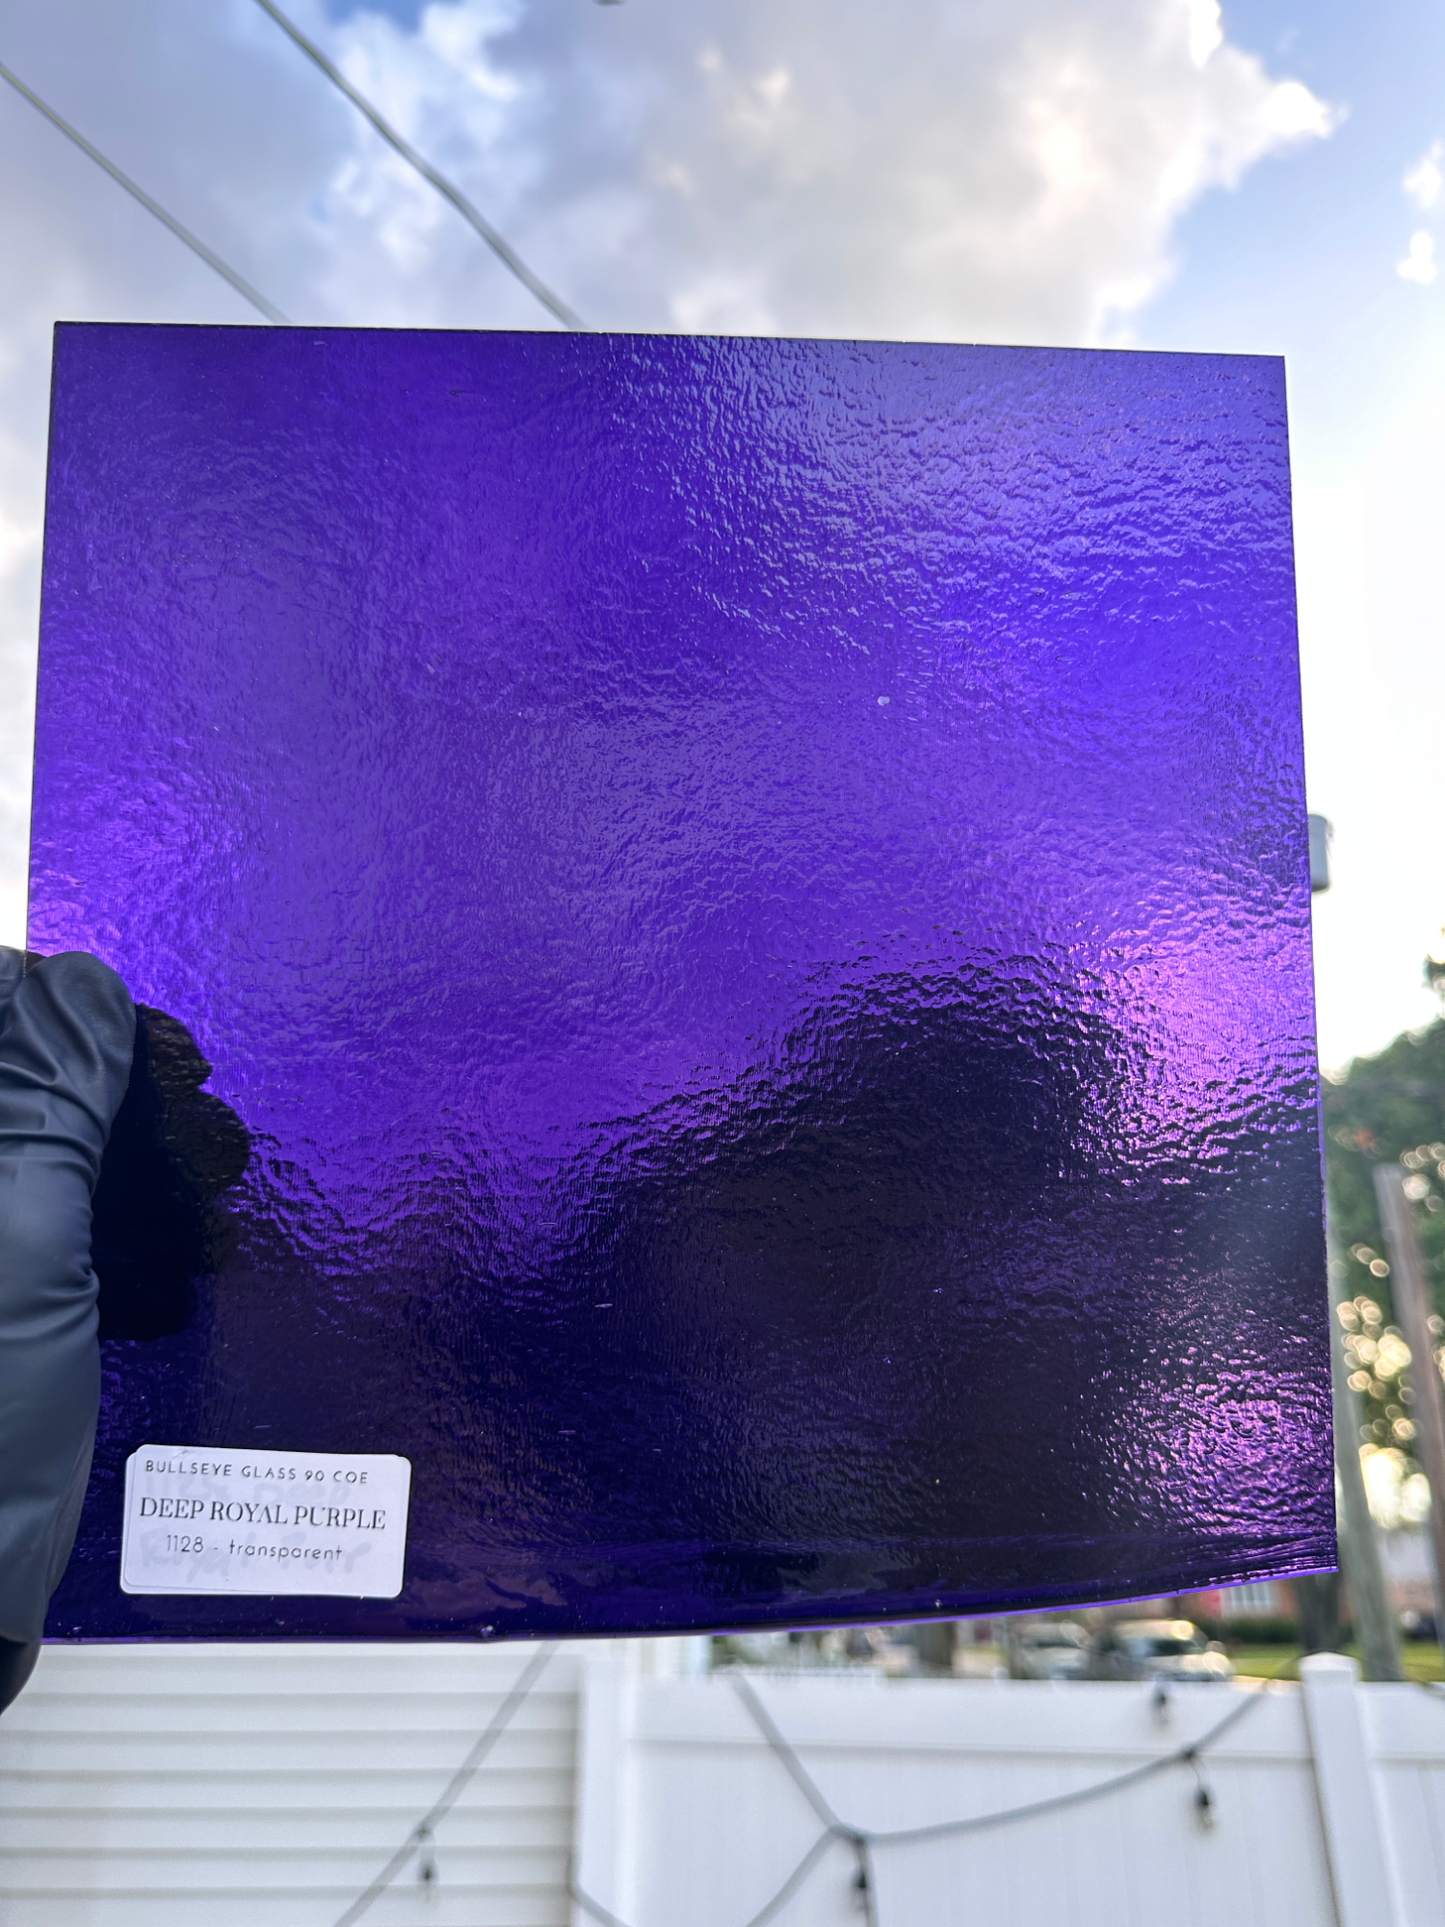 1128 Deep Royal Purple Transparent Bullseye Glass - 90 coe Fusible